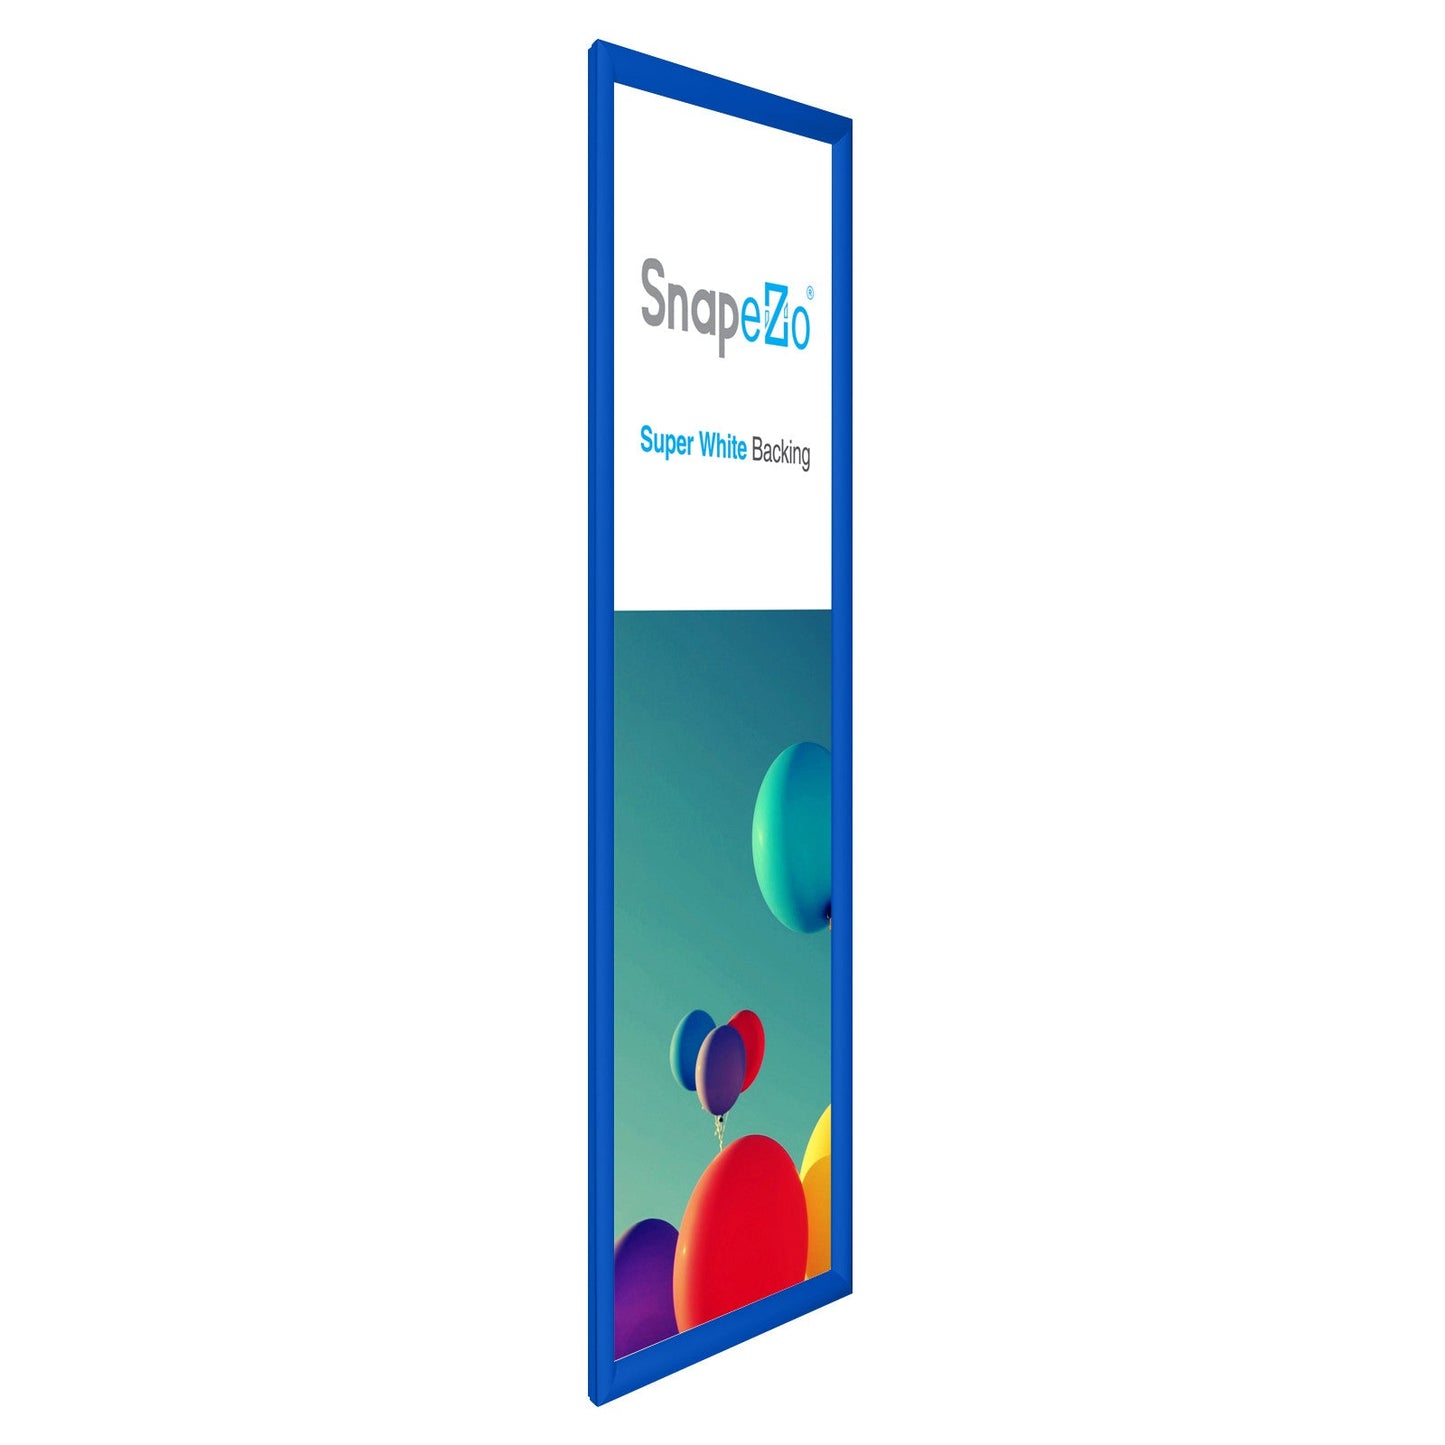 10x30 Blue SnapeZo® Snap Frame - 1.2" Profile